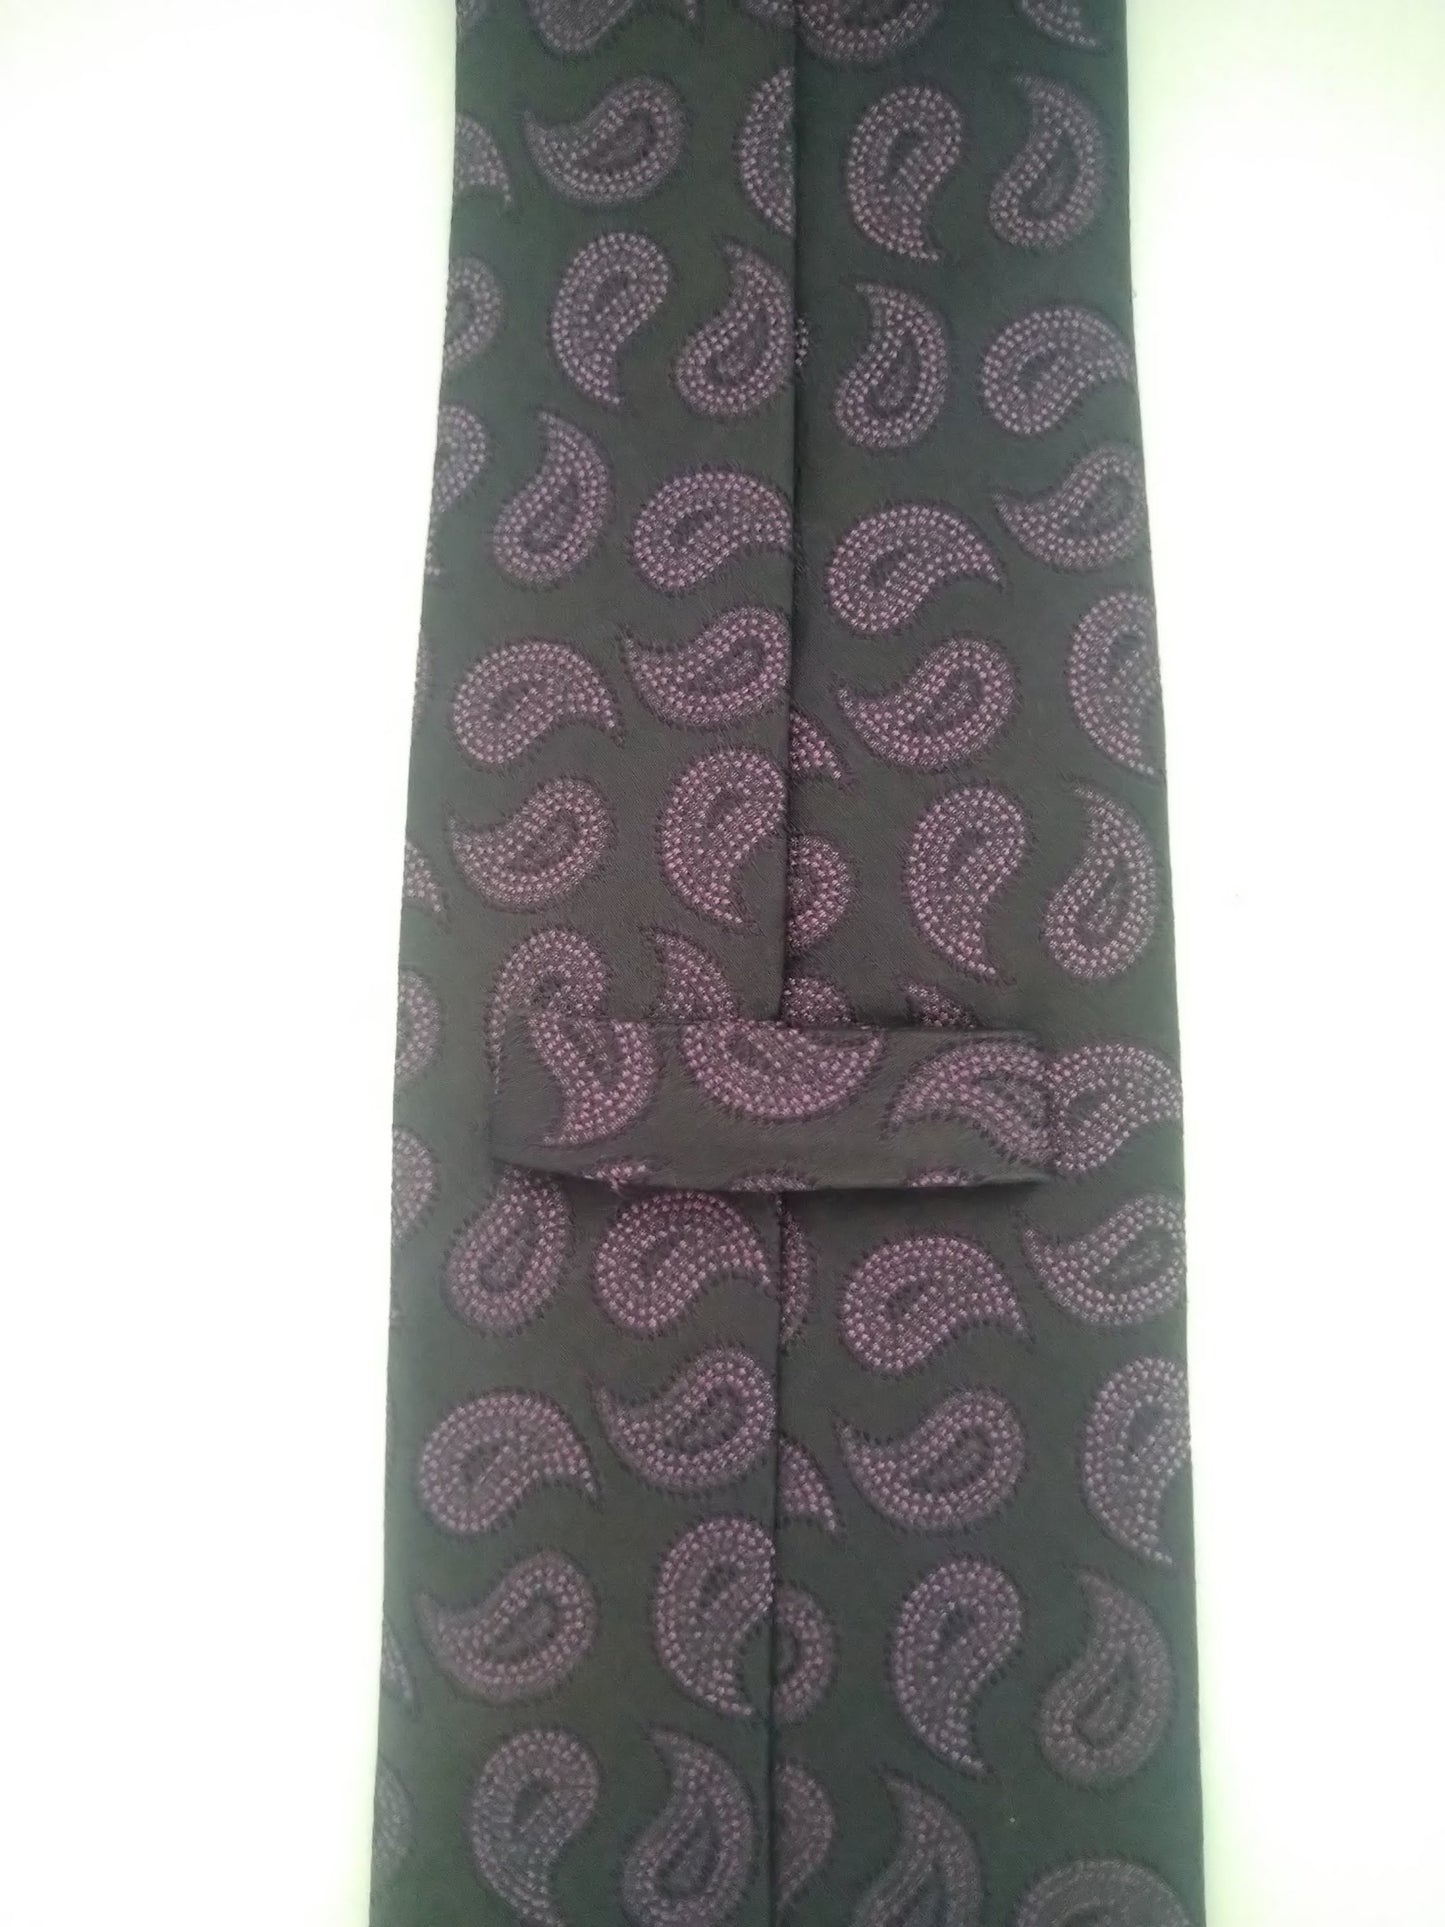 Vintage tie. Black purple motif. Silk